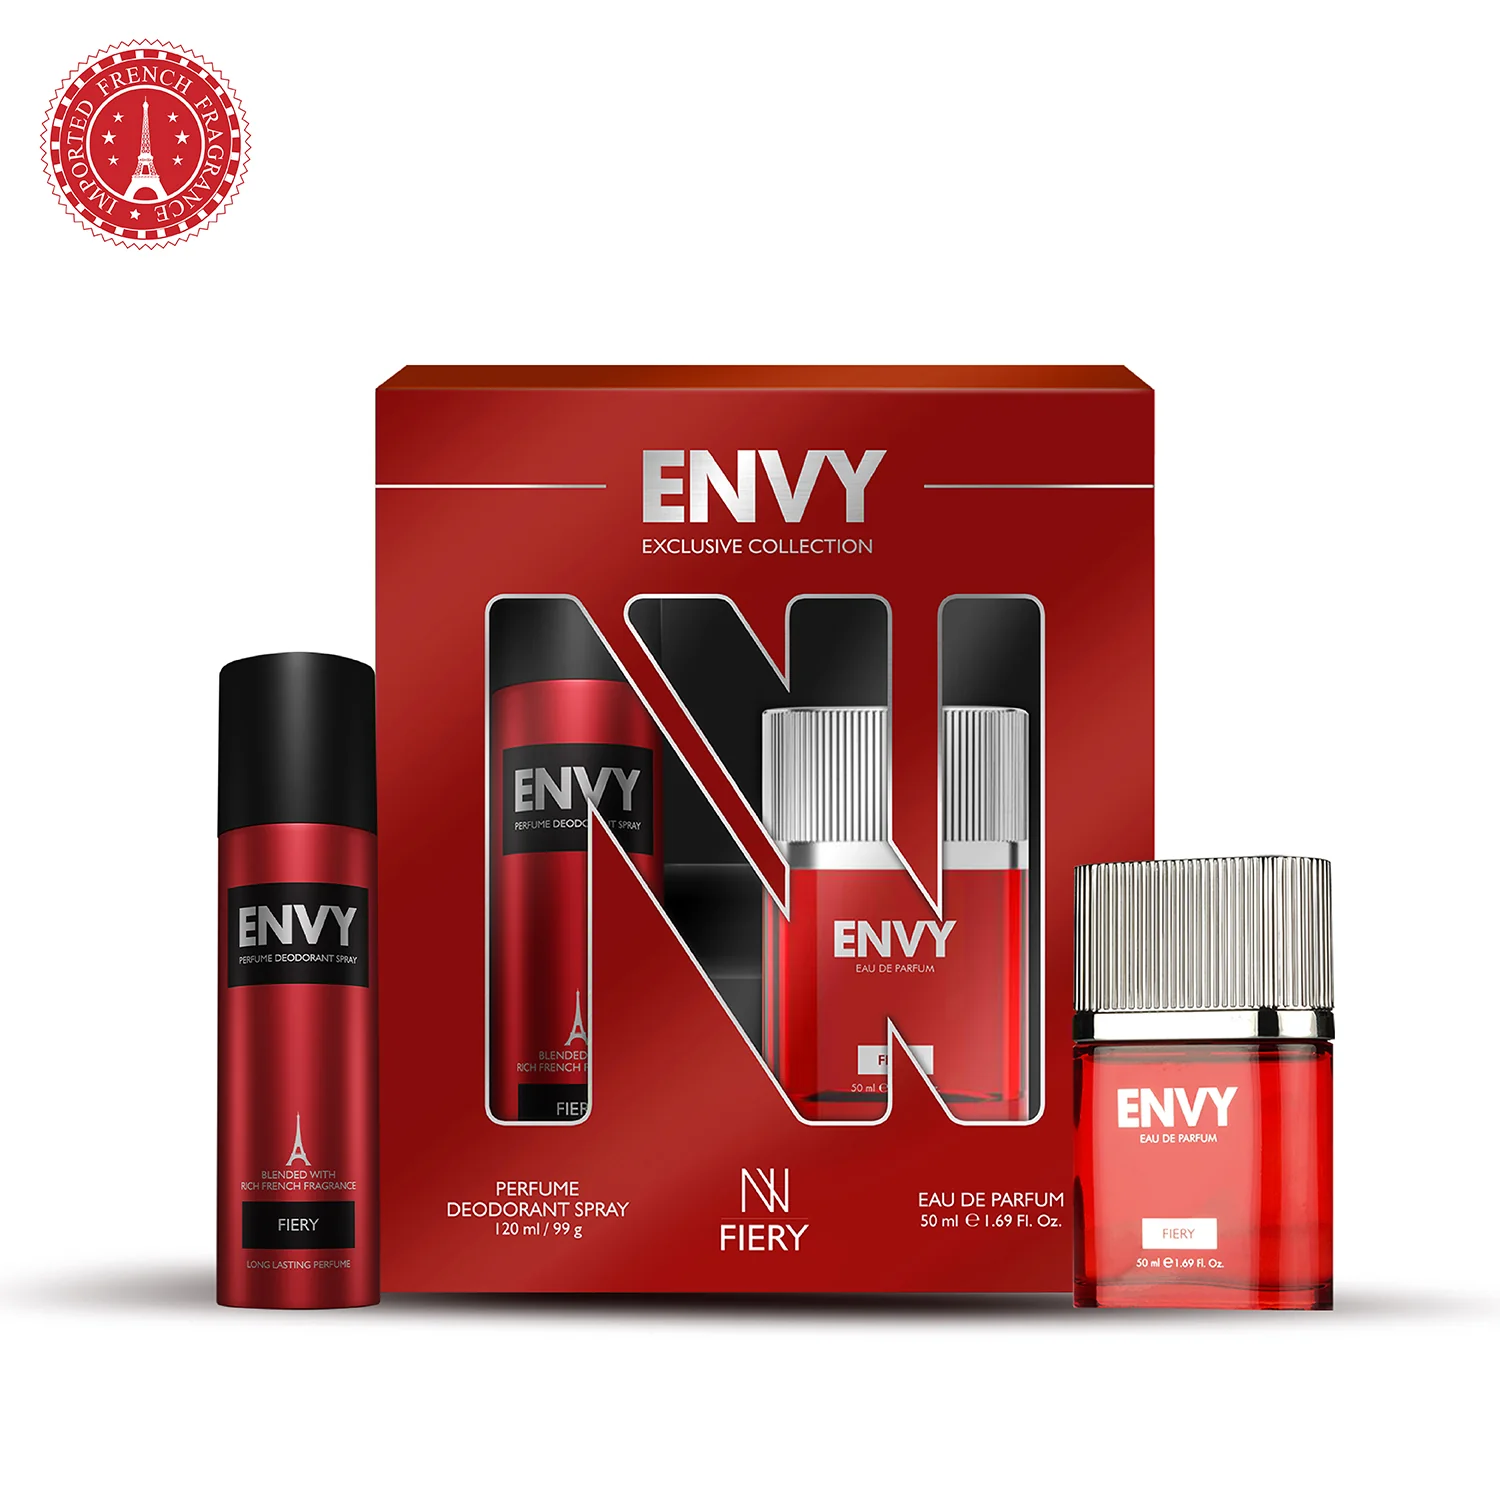 Envy Gift Pack Fiery deo perfume